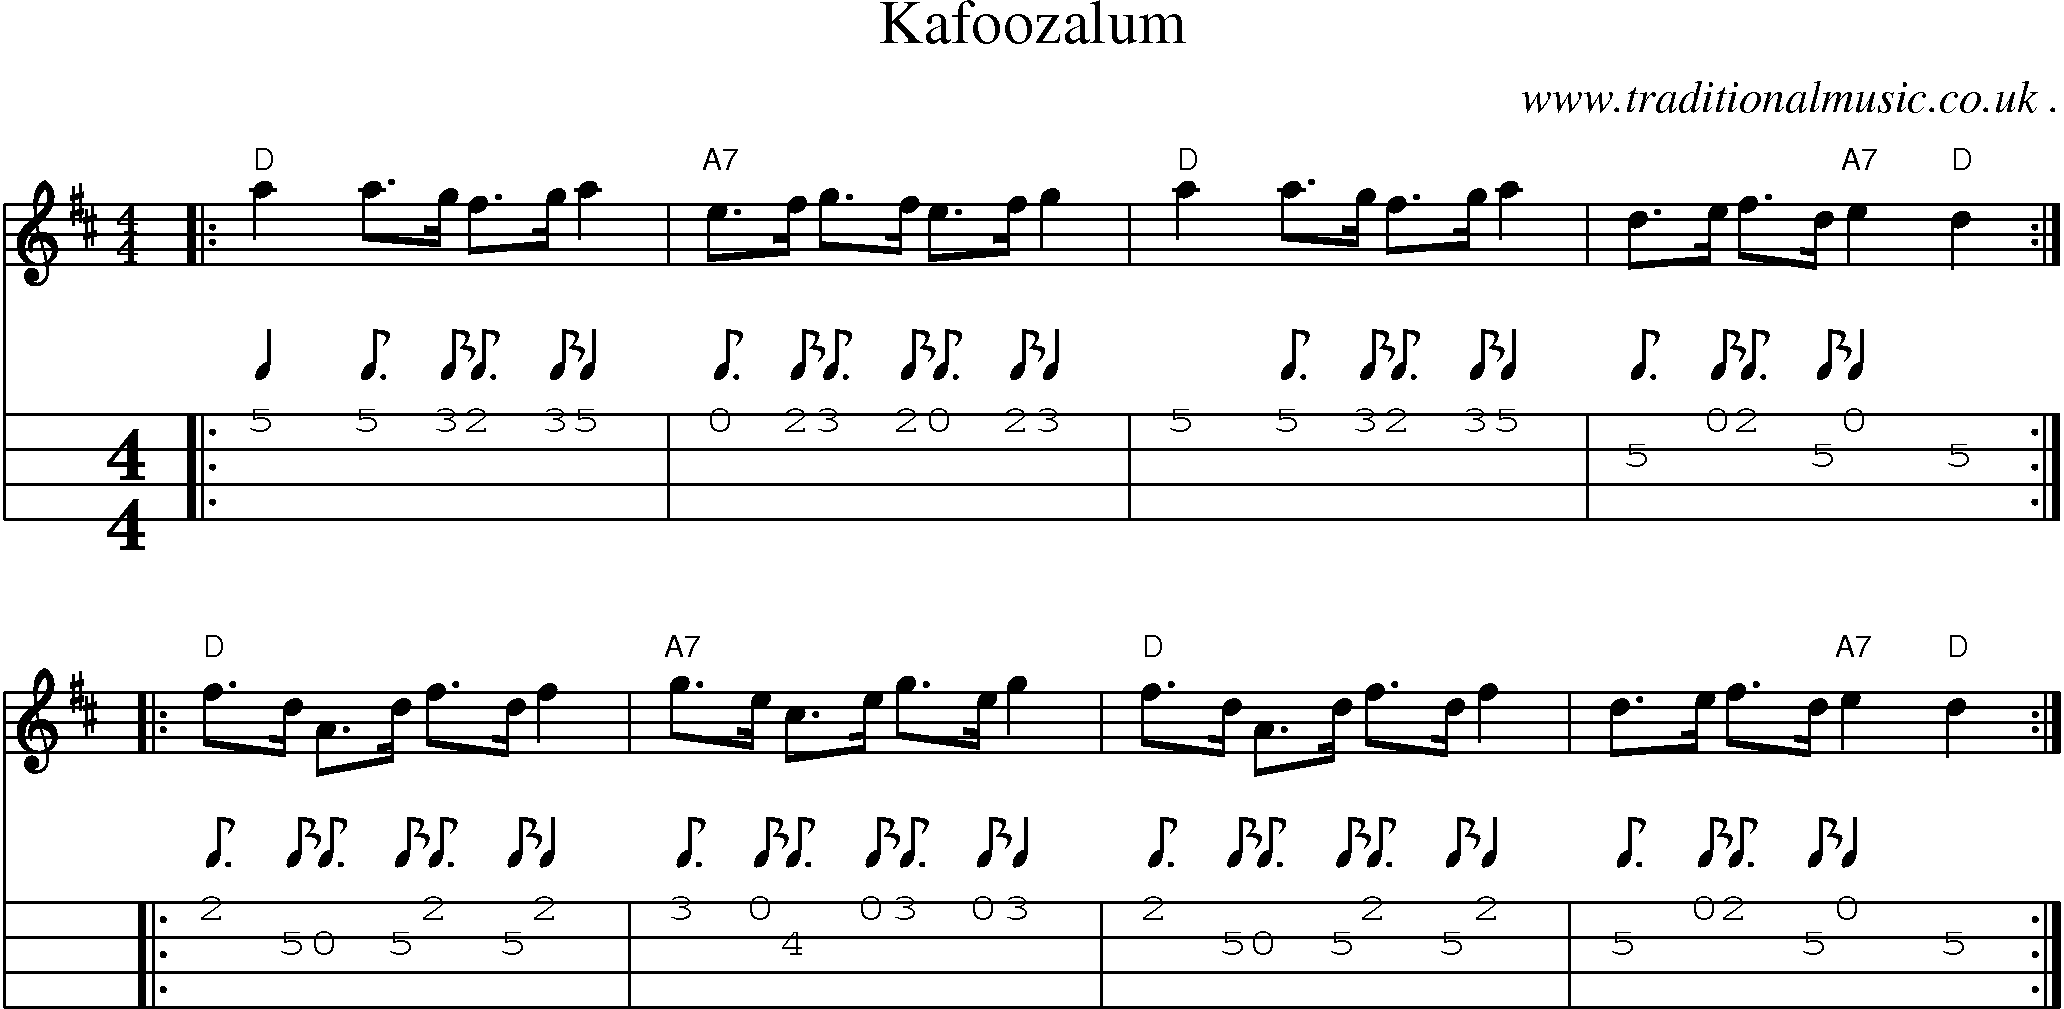 Sheet-music  score, Chords and Mandolin Tabs for Kafoozalum